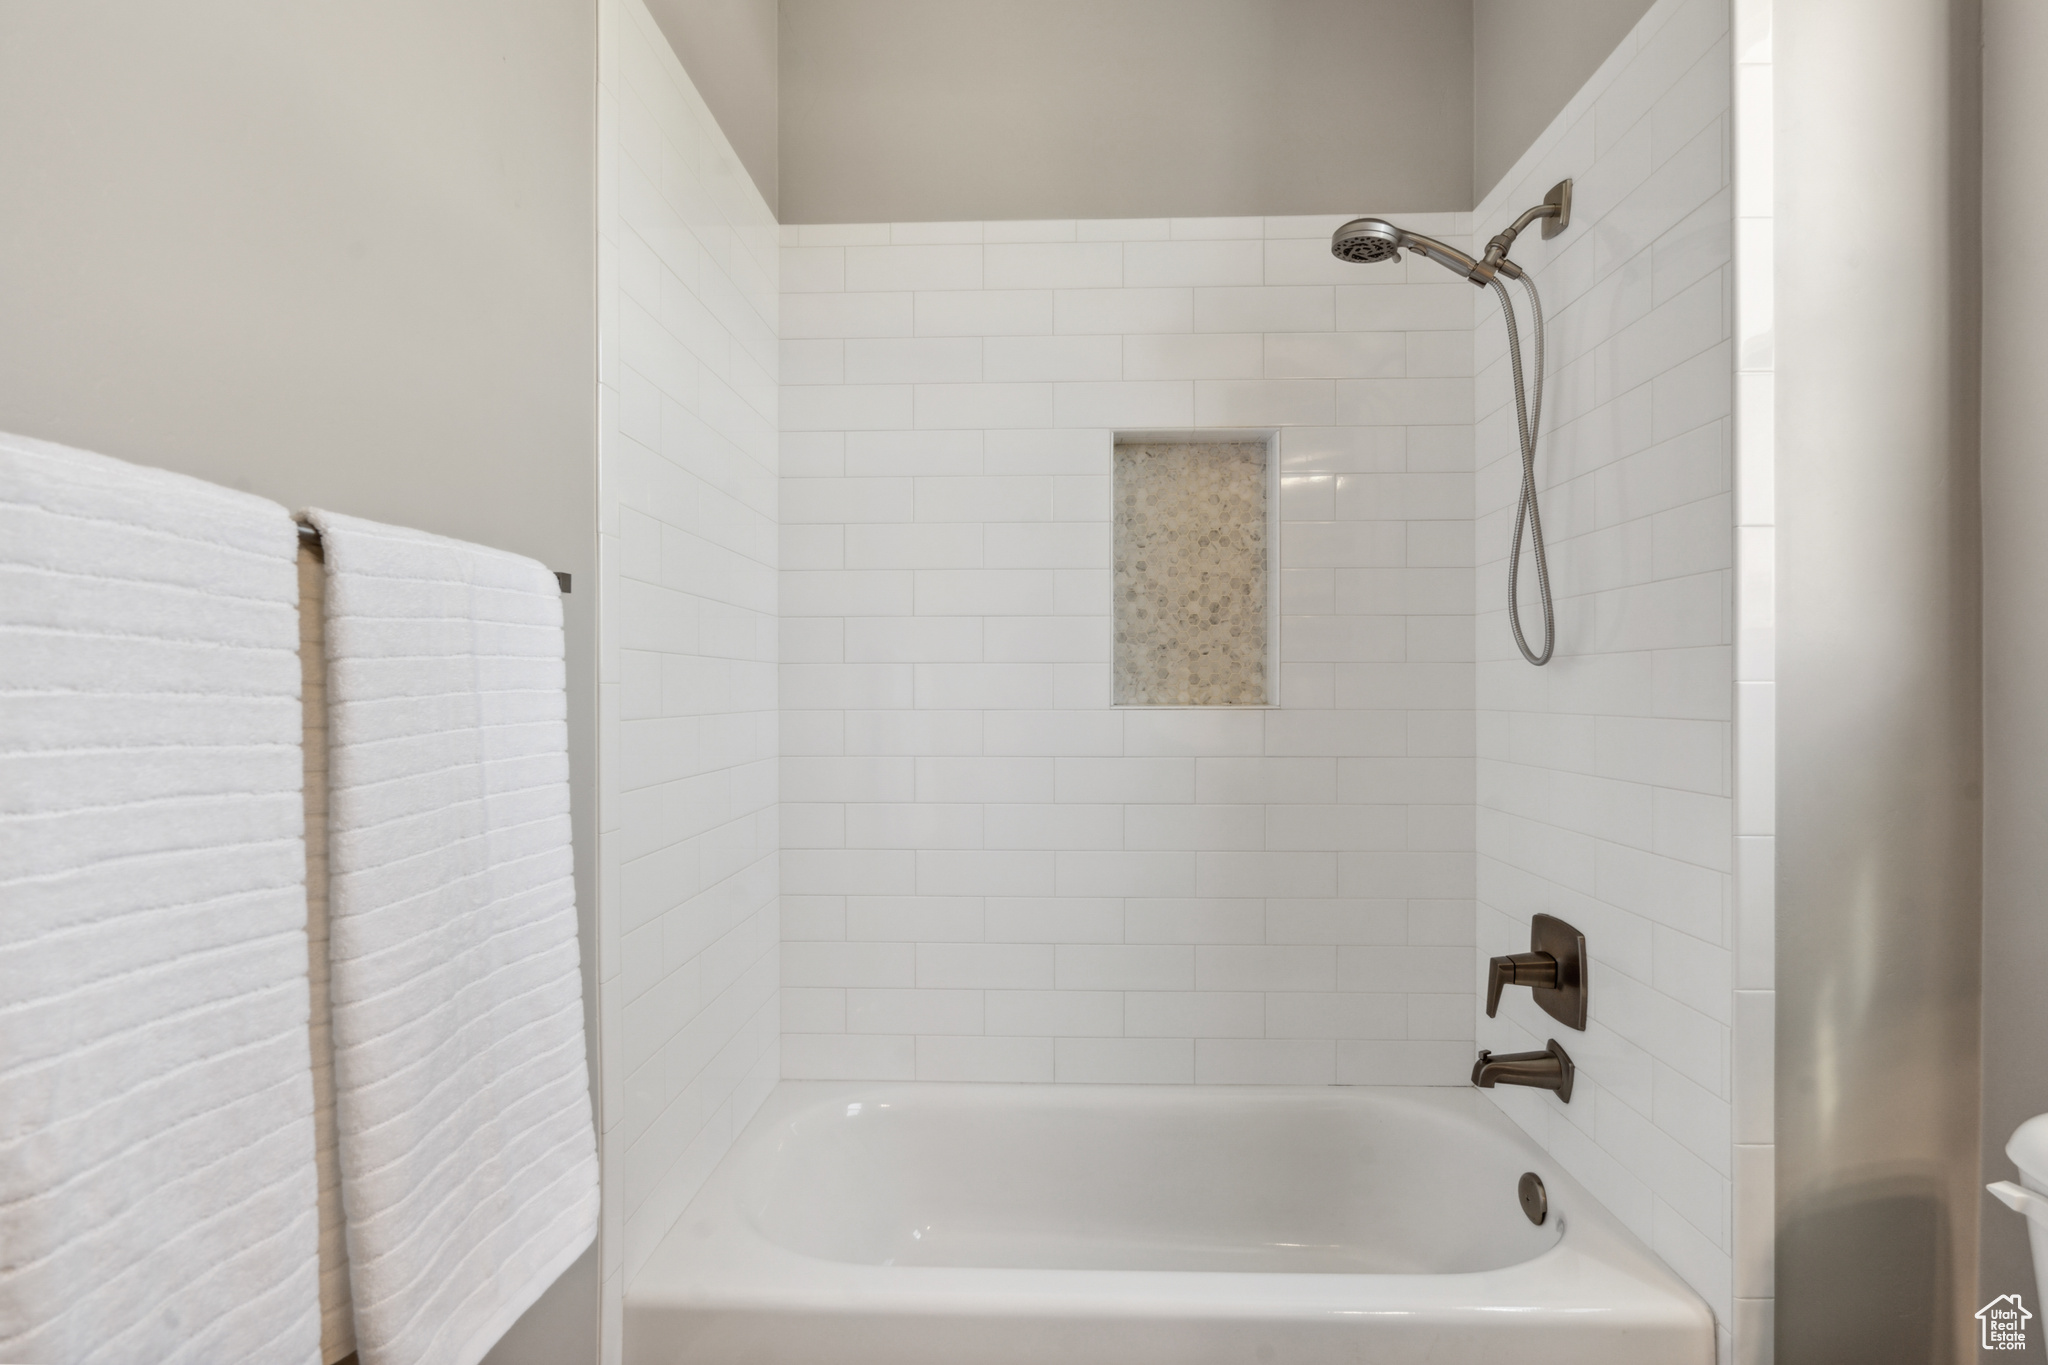 Bathroom with tiled shower / bath combo